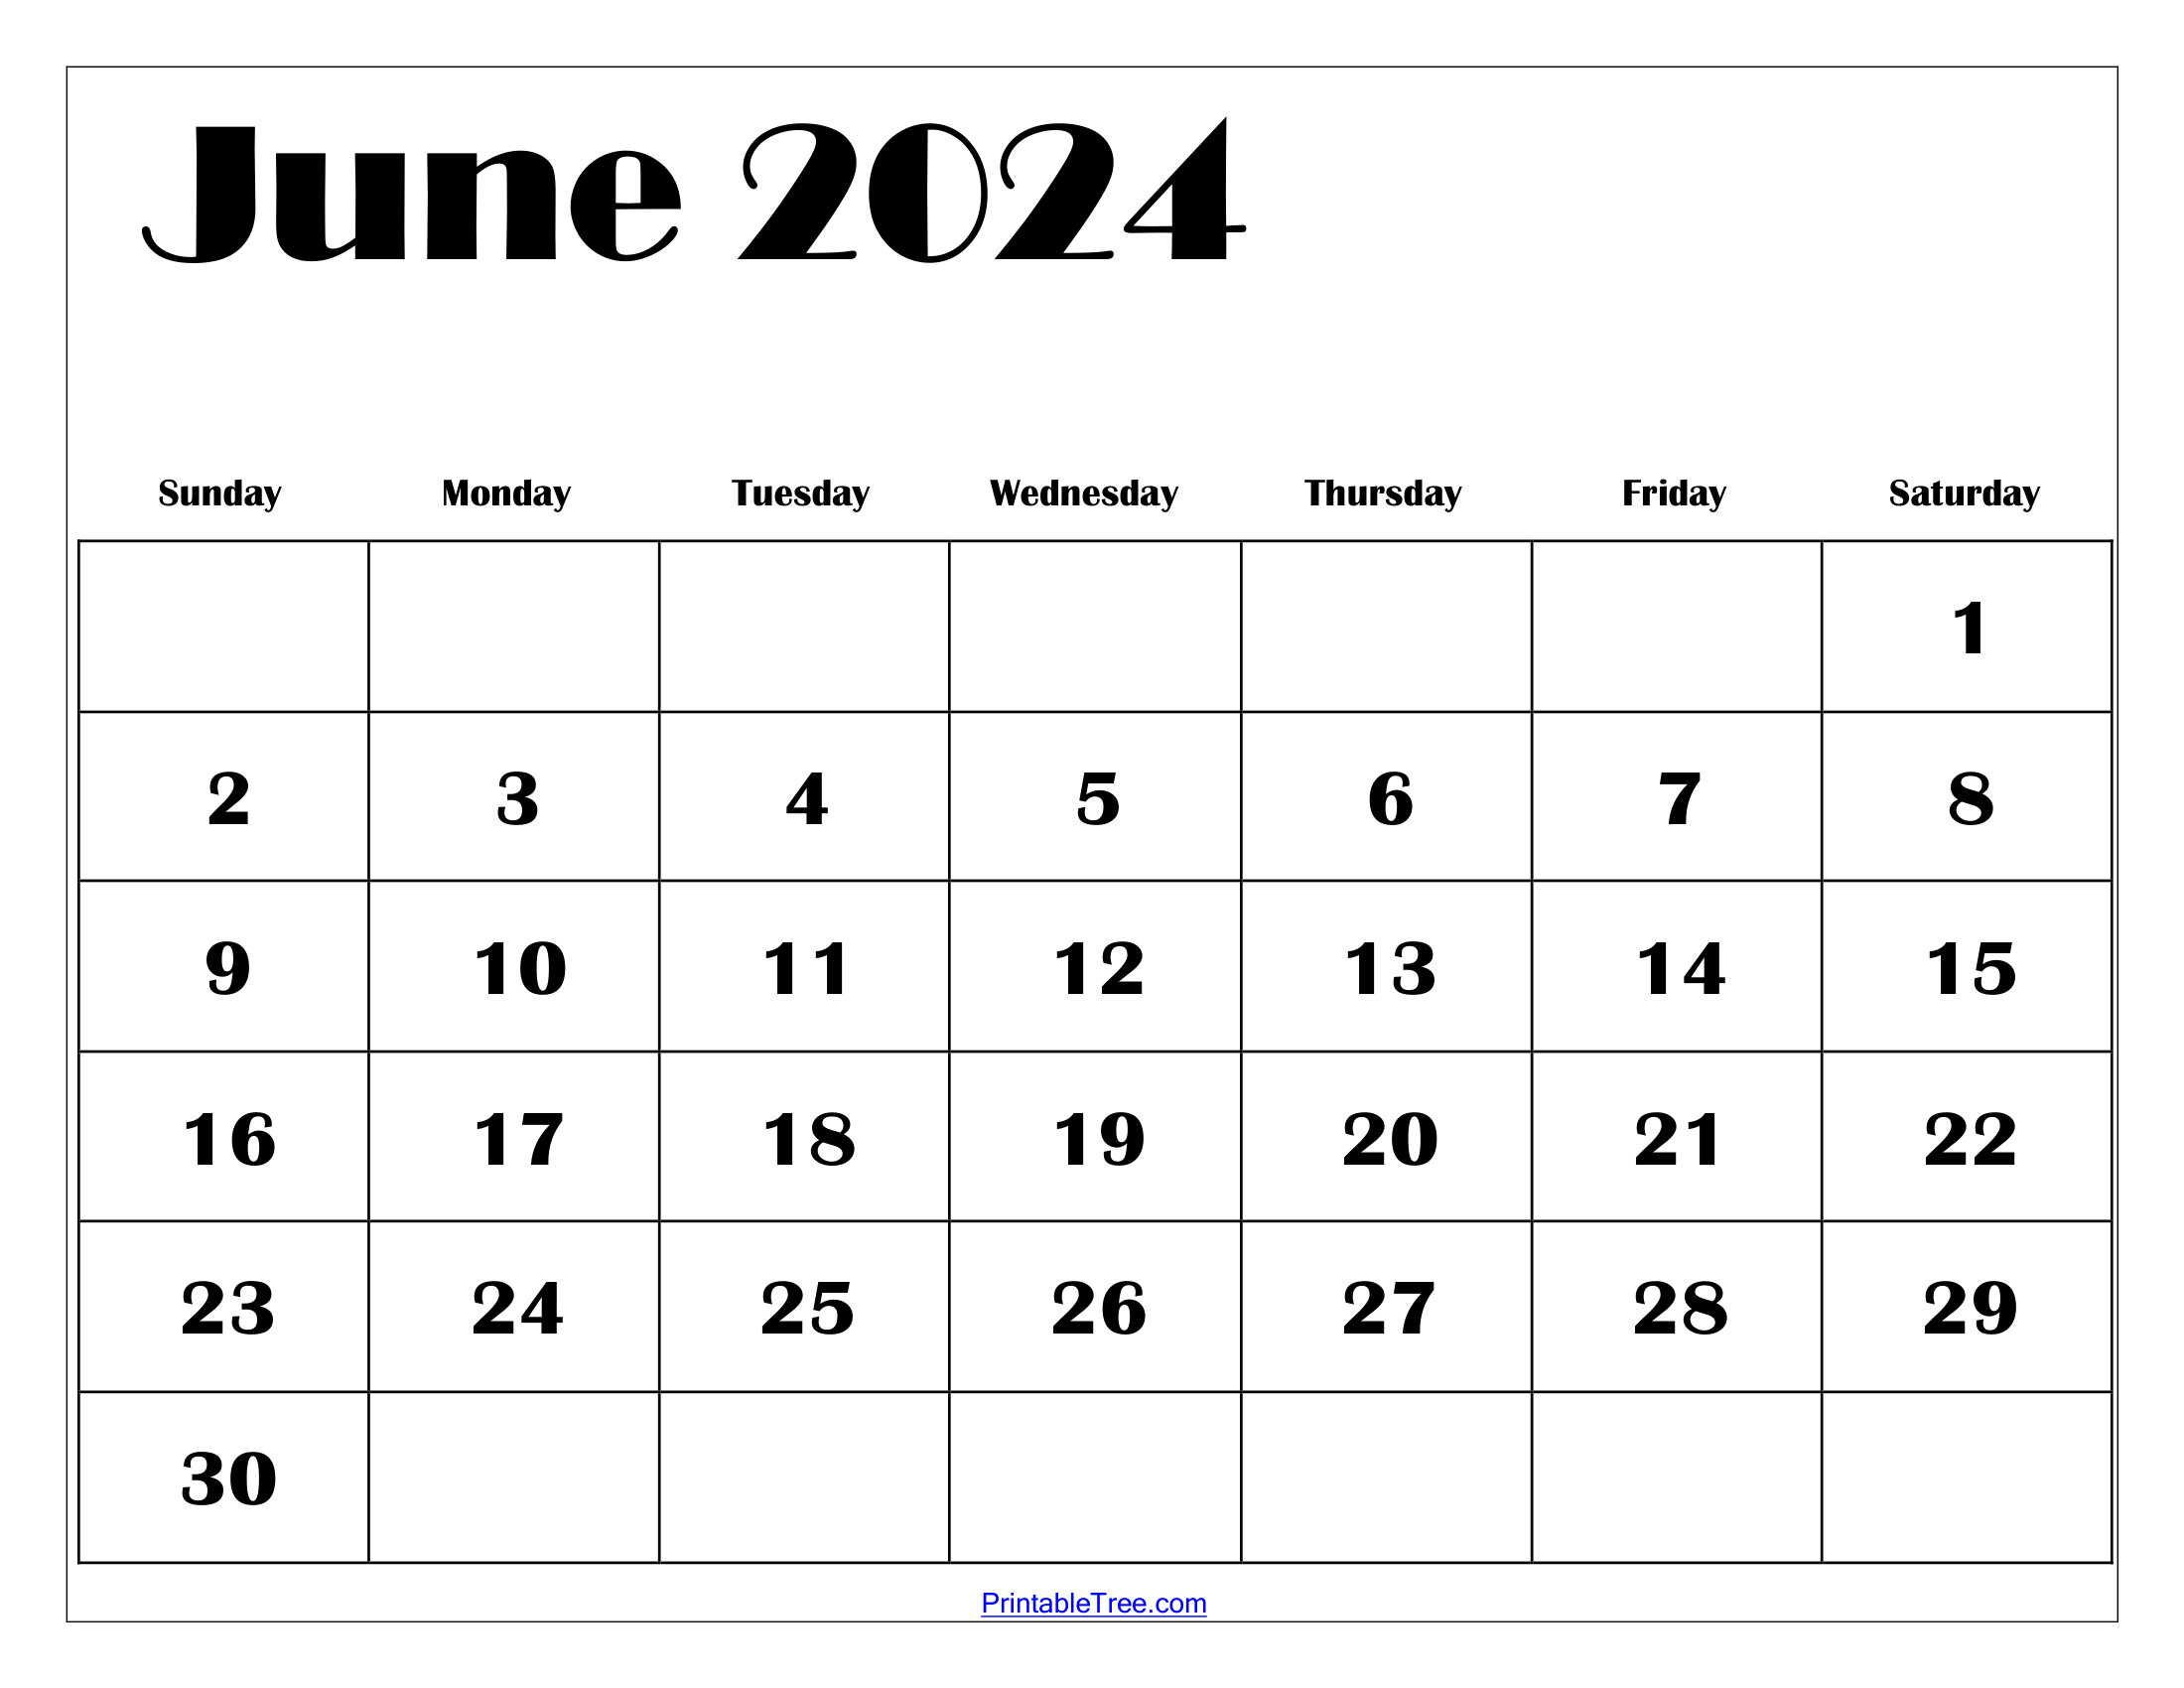 July 2023 To June 2024 Calendar Template Pdf Printable January 2024 - Free Printable 2 Page June 2024 Weekly Calendar